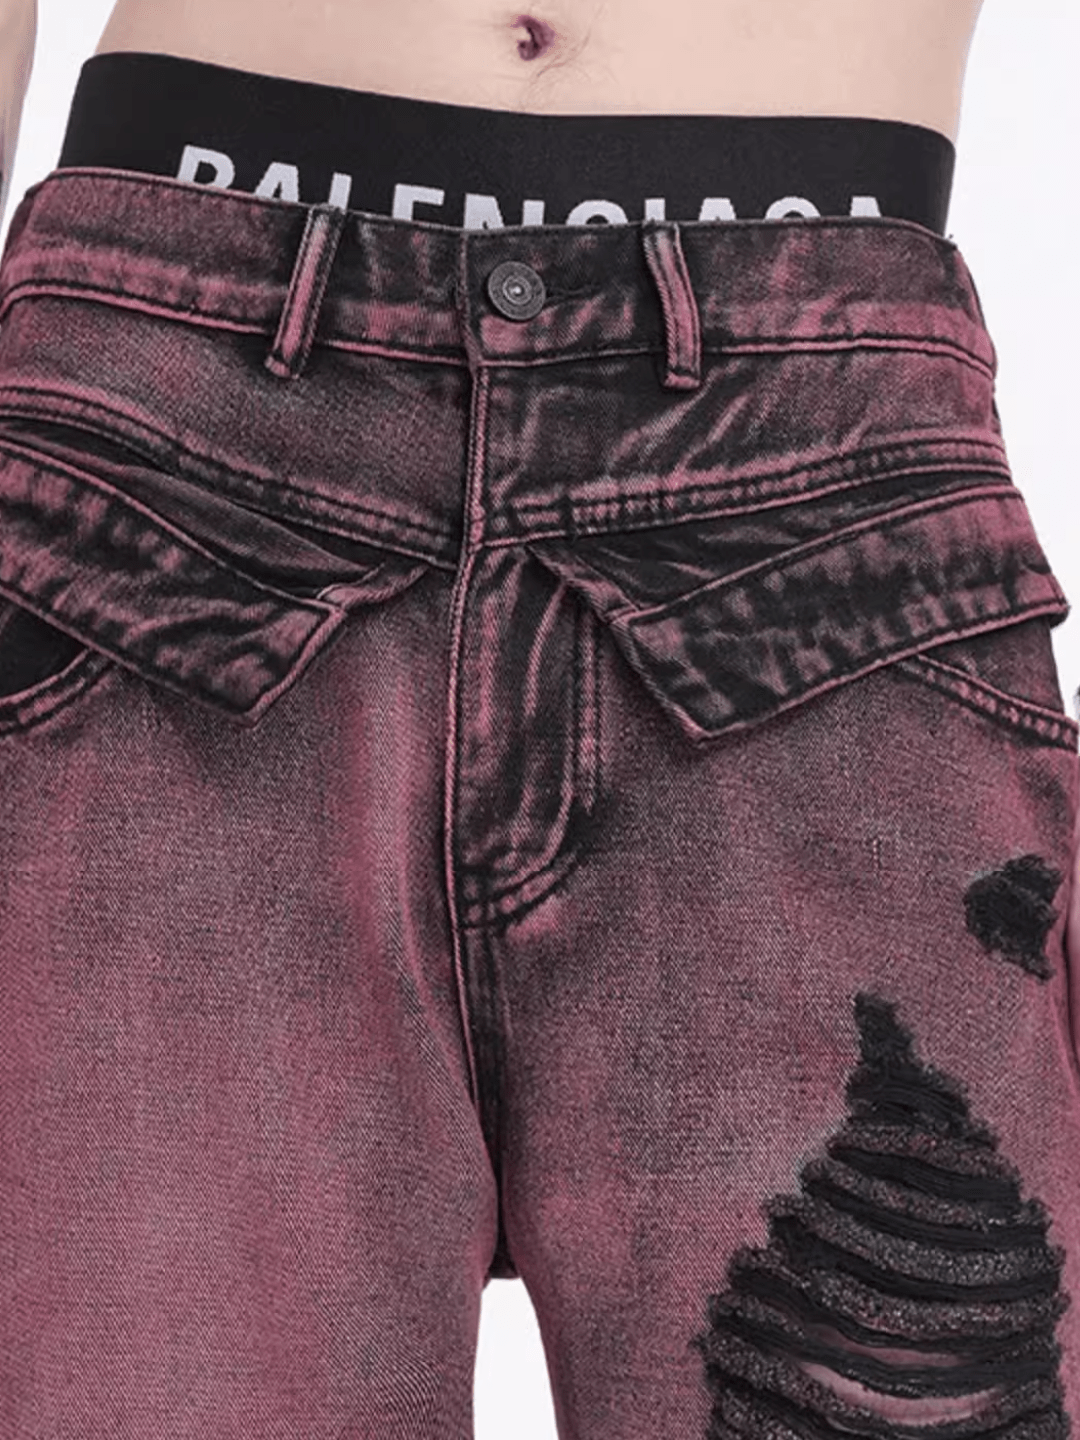 Purple vintage washed jeans na1158